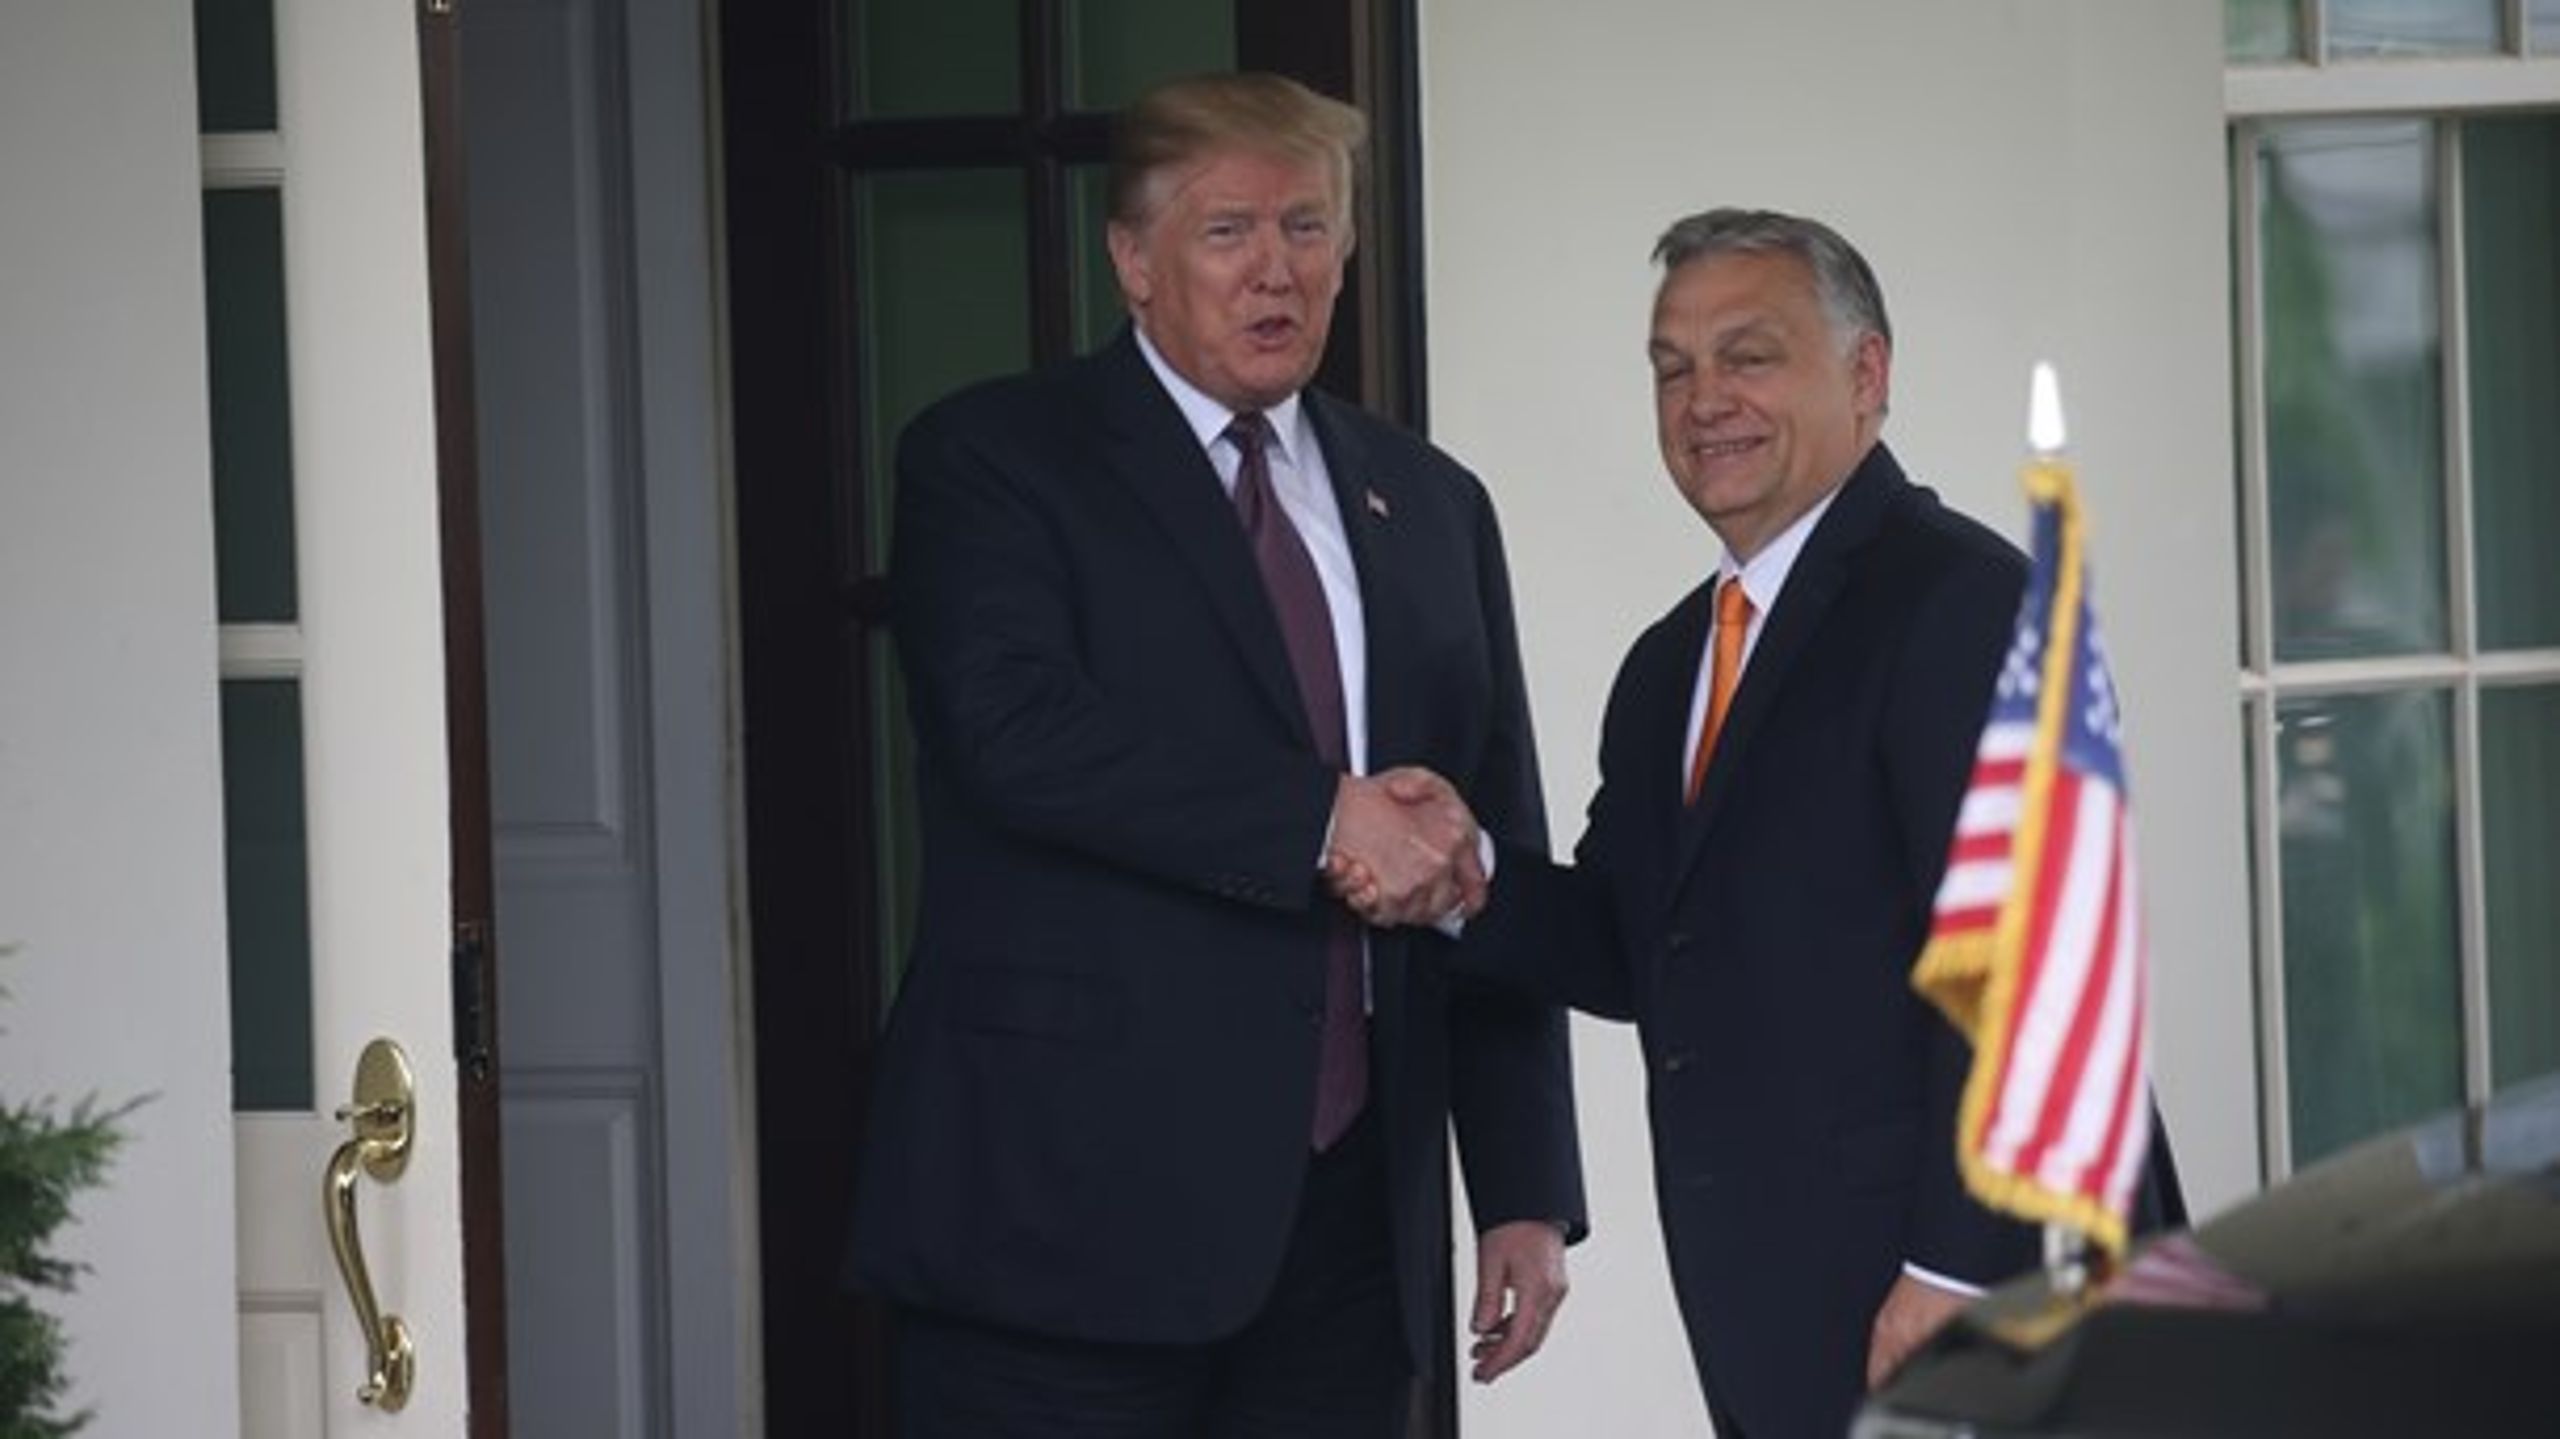 Orban har ligesom Trump behov for at hans modstandere dæmoniser ham, skriver Zsuzsanna Szelényi.